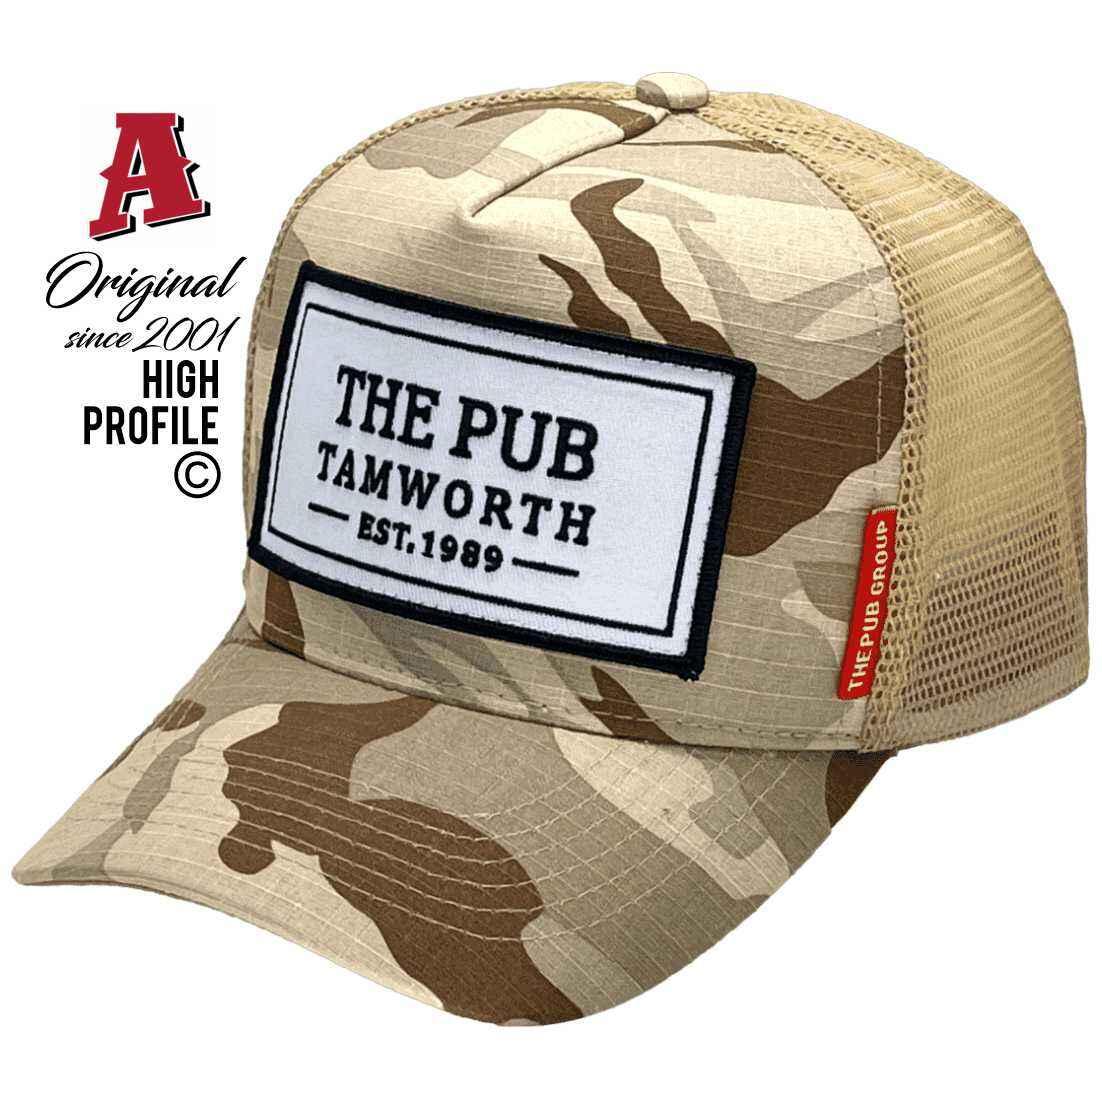 The Pub Group Tamworth NSW Basic Aussie Trucker Hats with Australian HeadFit Crown Ripstop Camo Fabric Desert Snapback